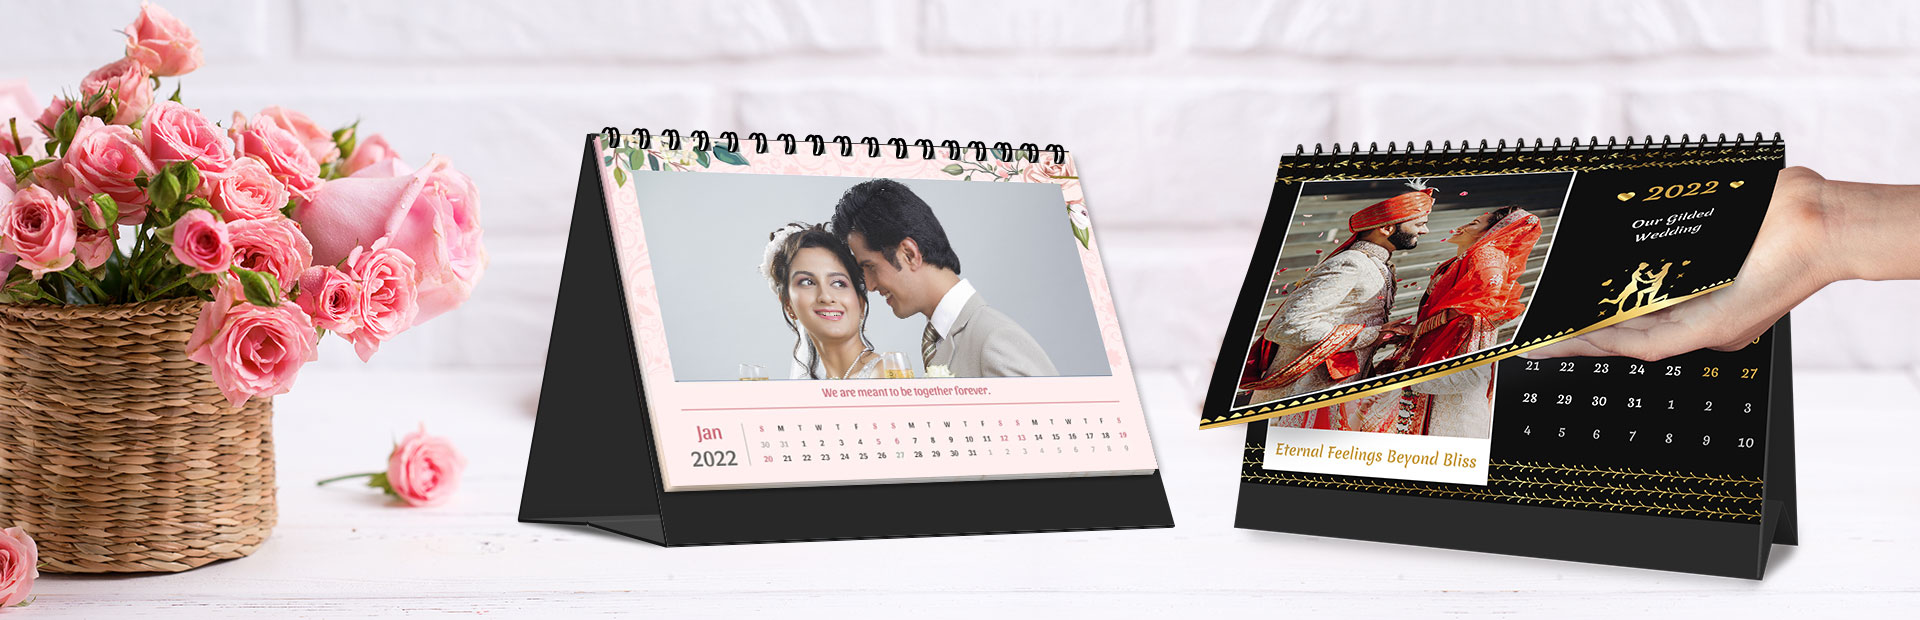 Wedding Desk Calendars Online 